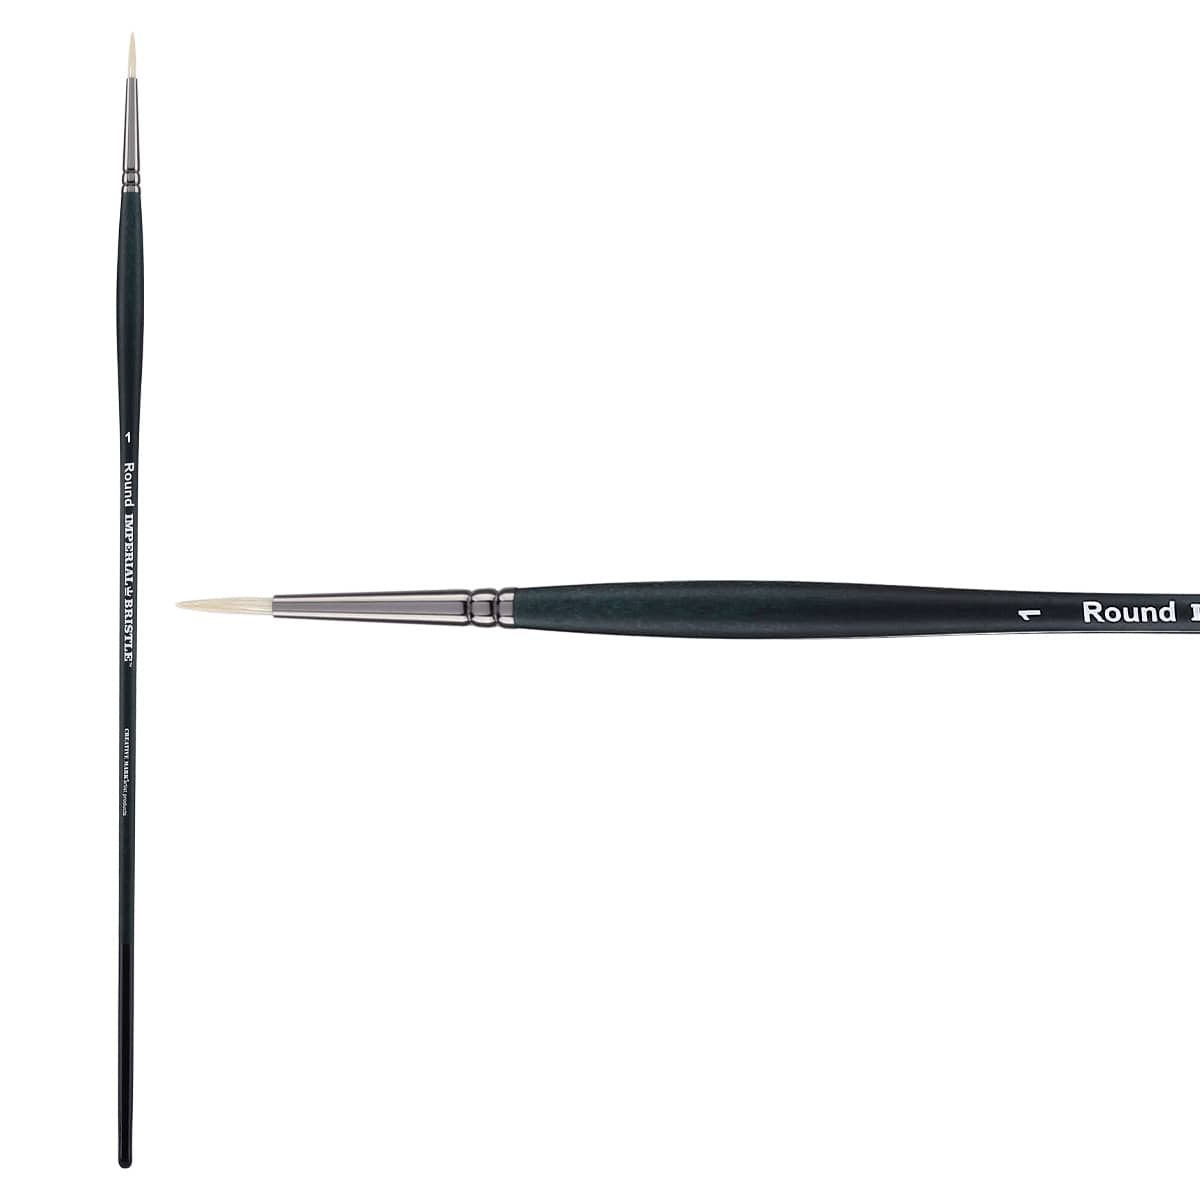 Imperial Professional Chungking Hog Bristle Brush, Round Size #1